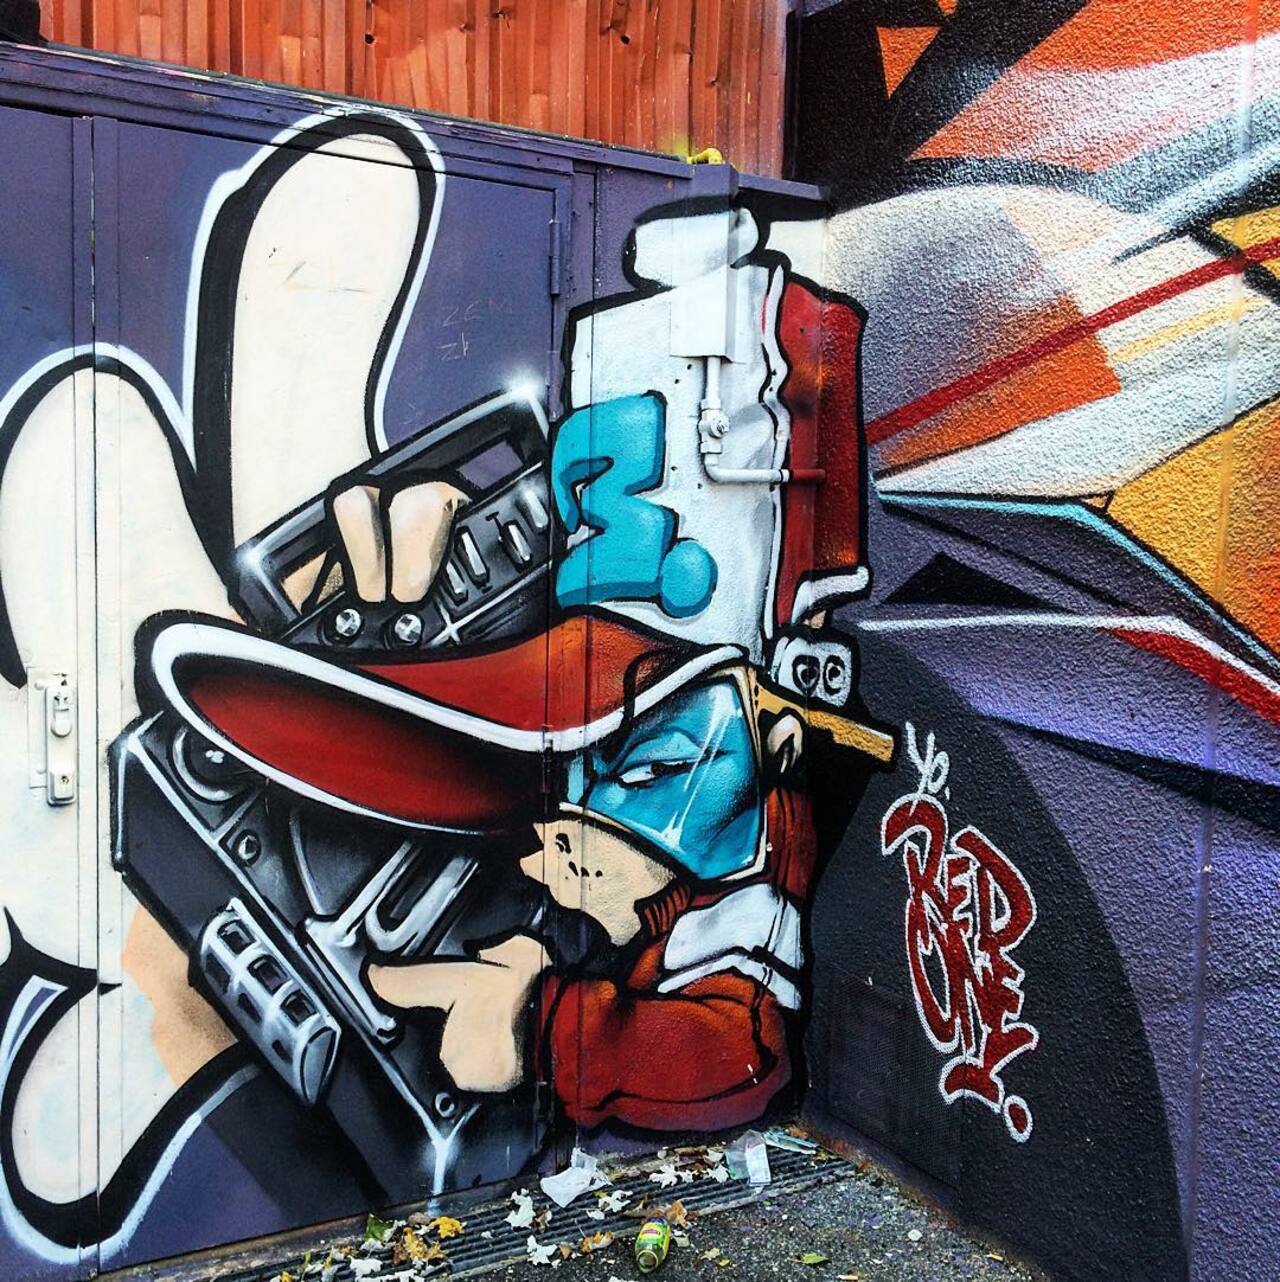 #Paris #graffiti photo by @julosteart http://ift.tt/1Z9Vk9i #StreetArt http://t.co/YqyzFwpJSd